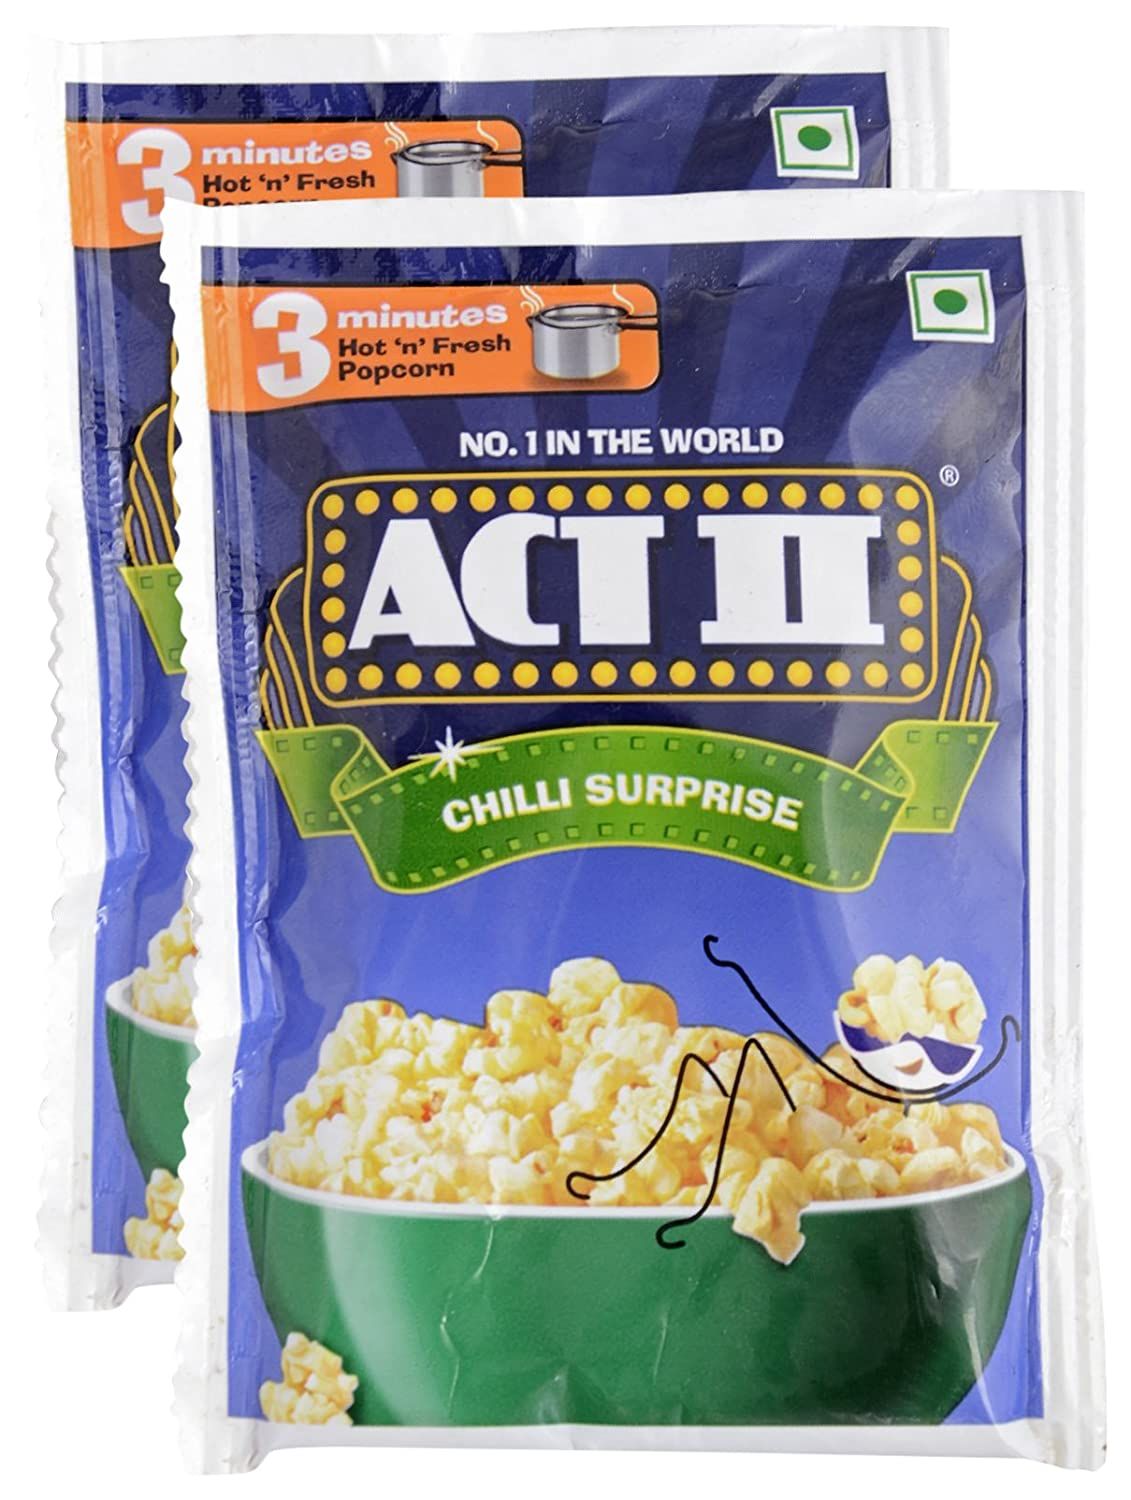 Act II Popcorn Chilli Surprise Image